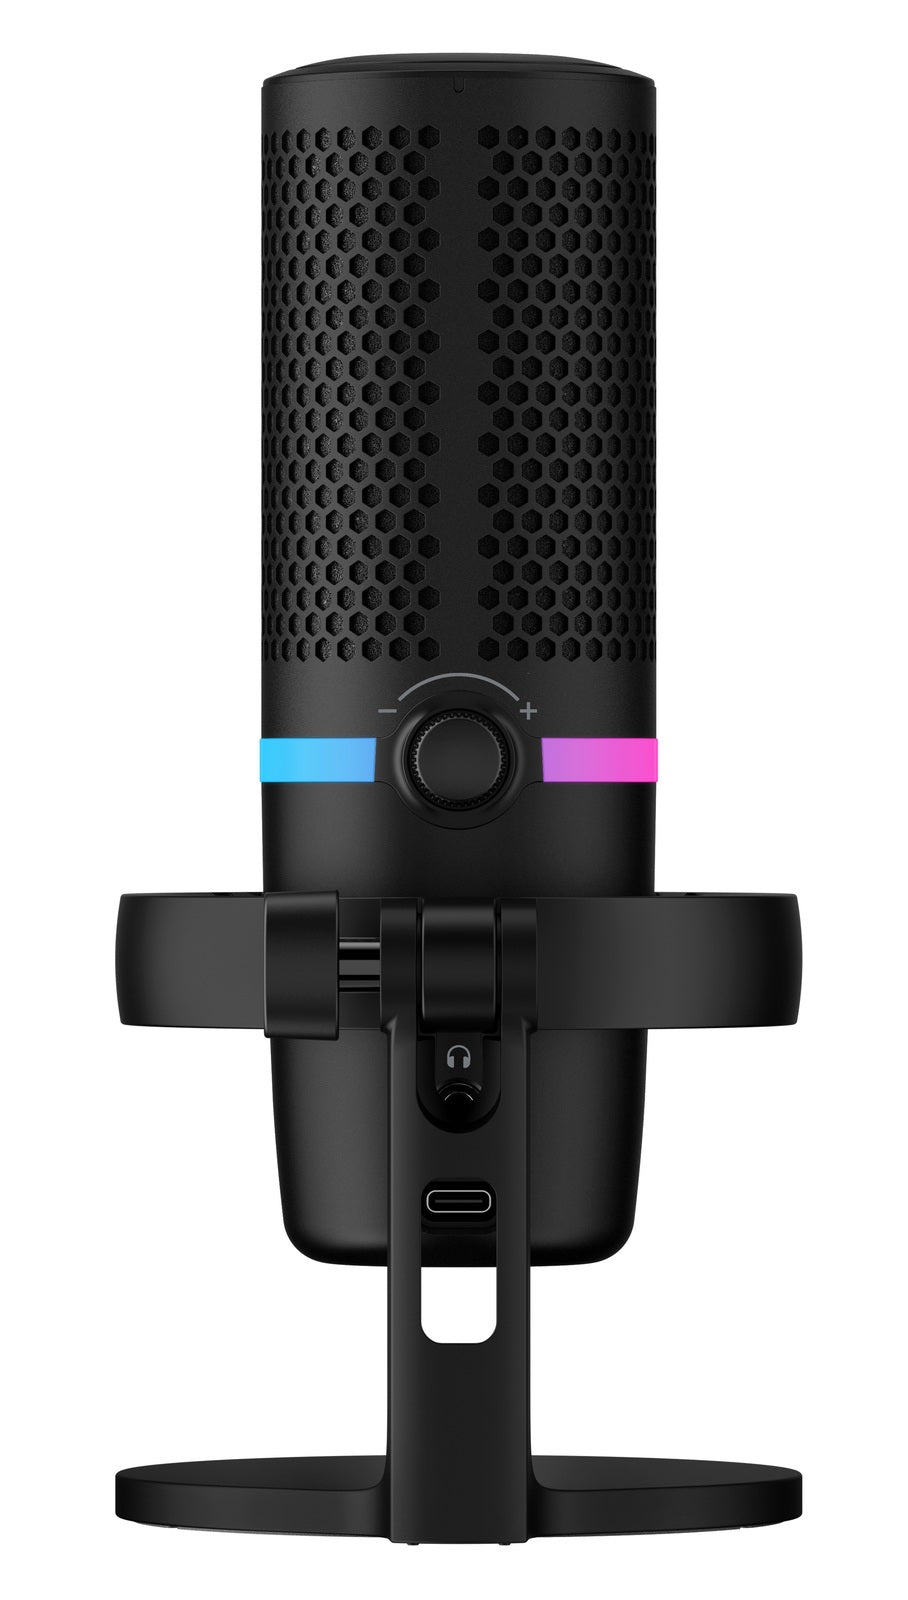 HyperX DuoCast - USB Microphone (Black) - RGB Lighting